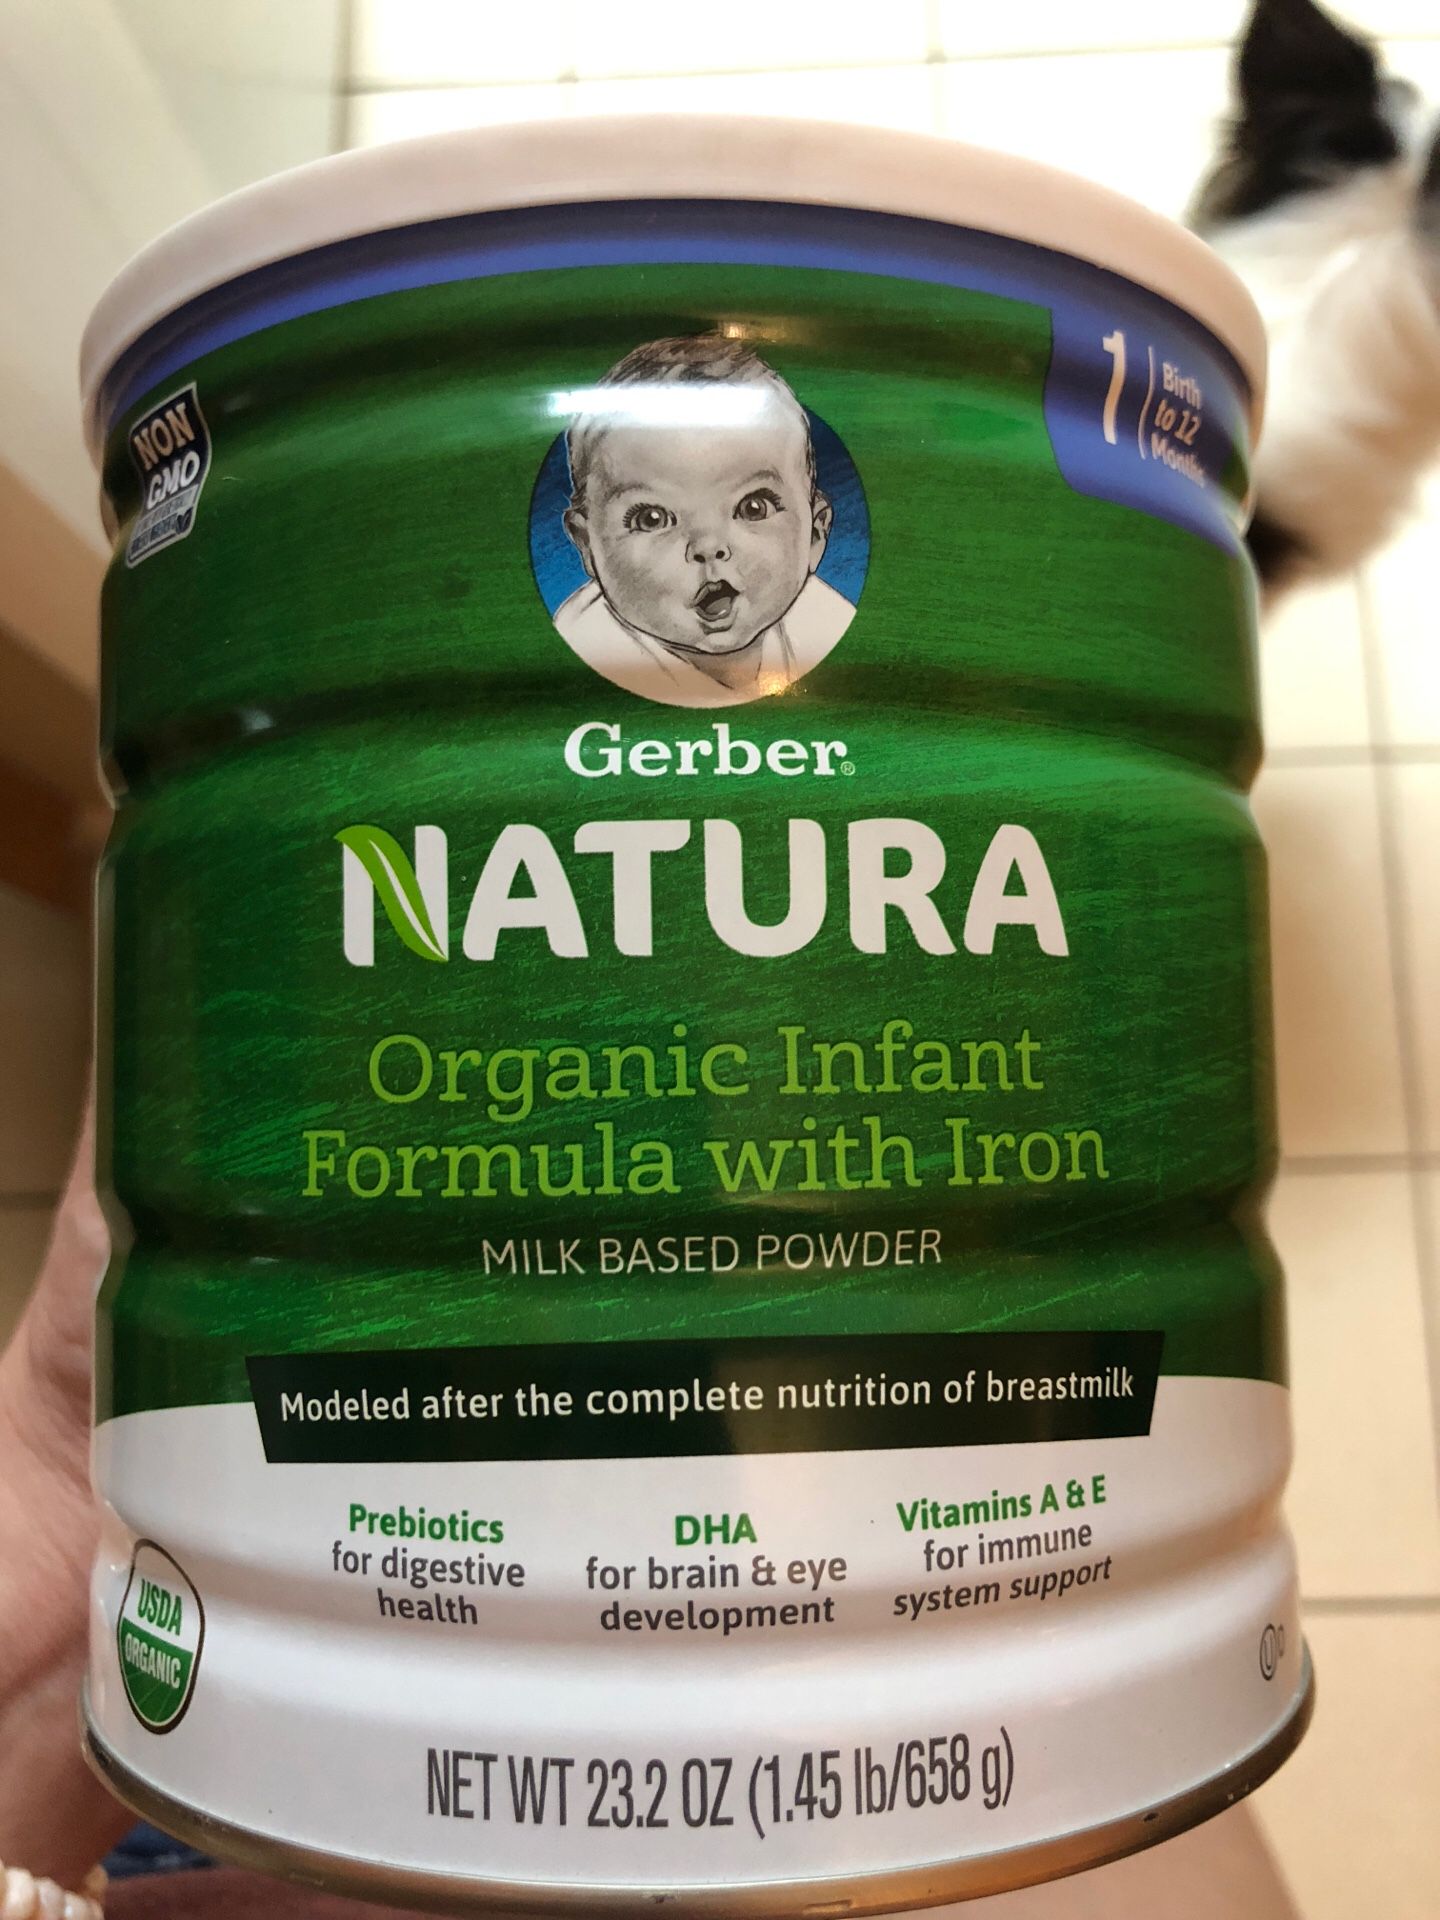 Gerber Natura infant formula